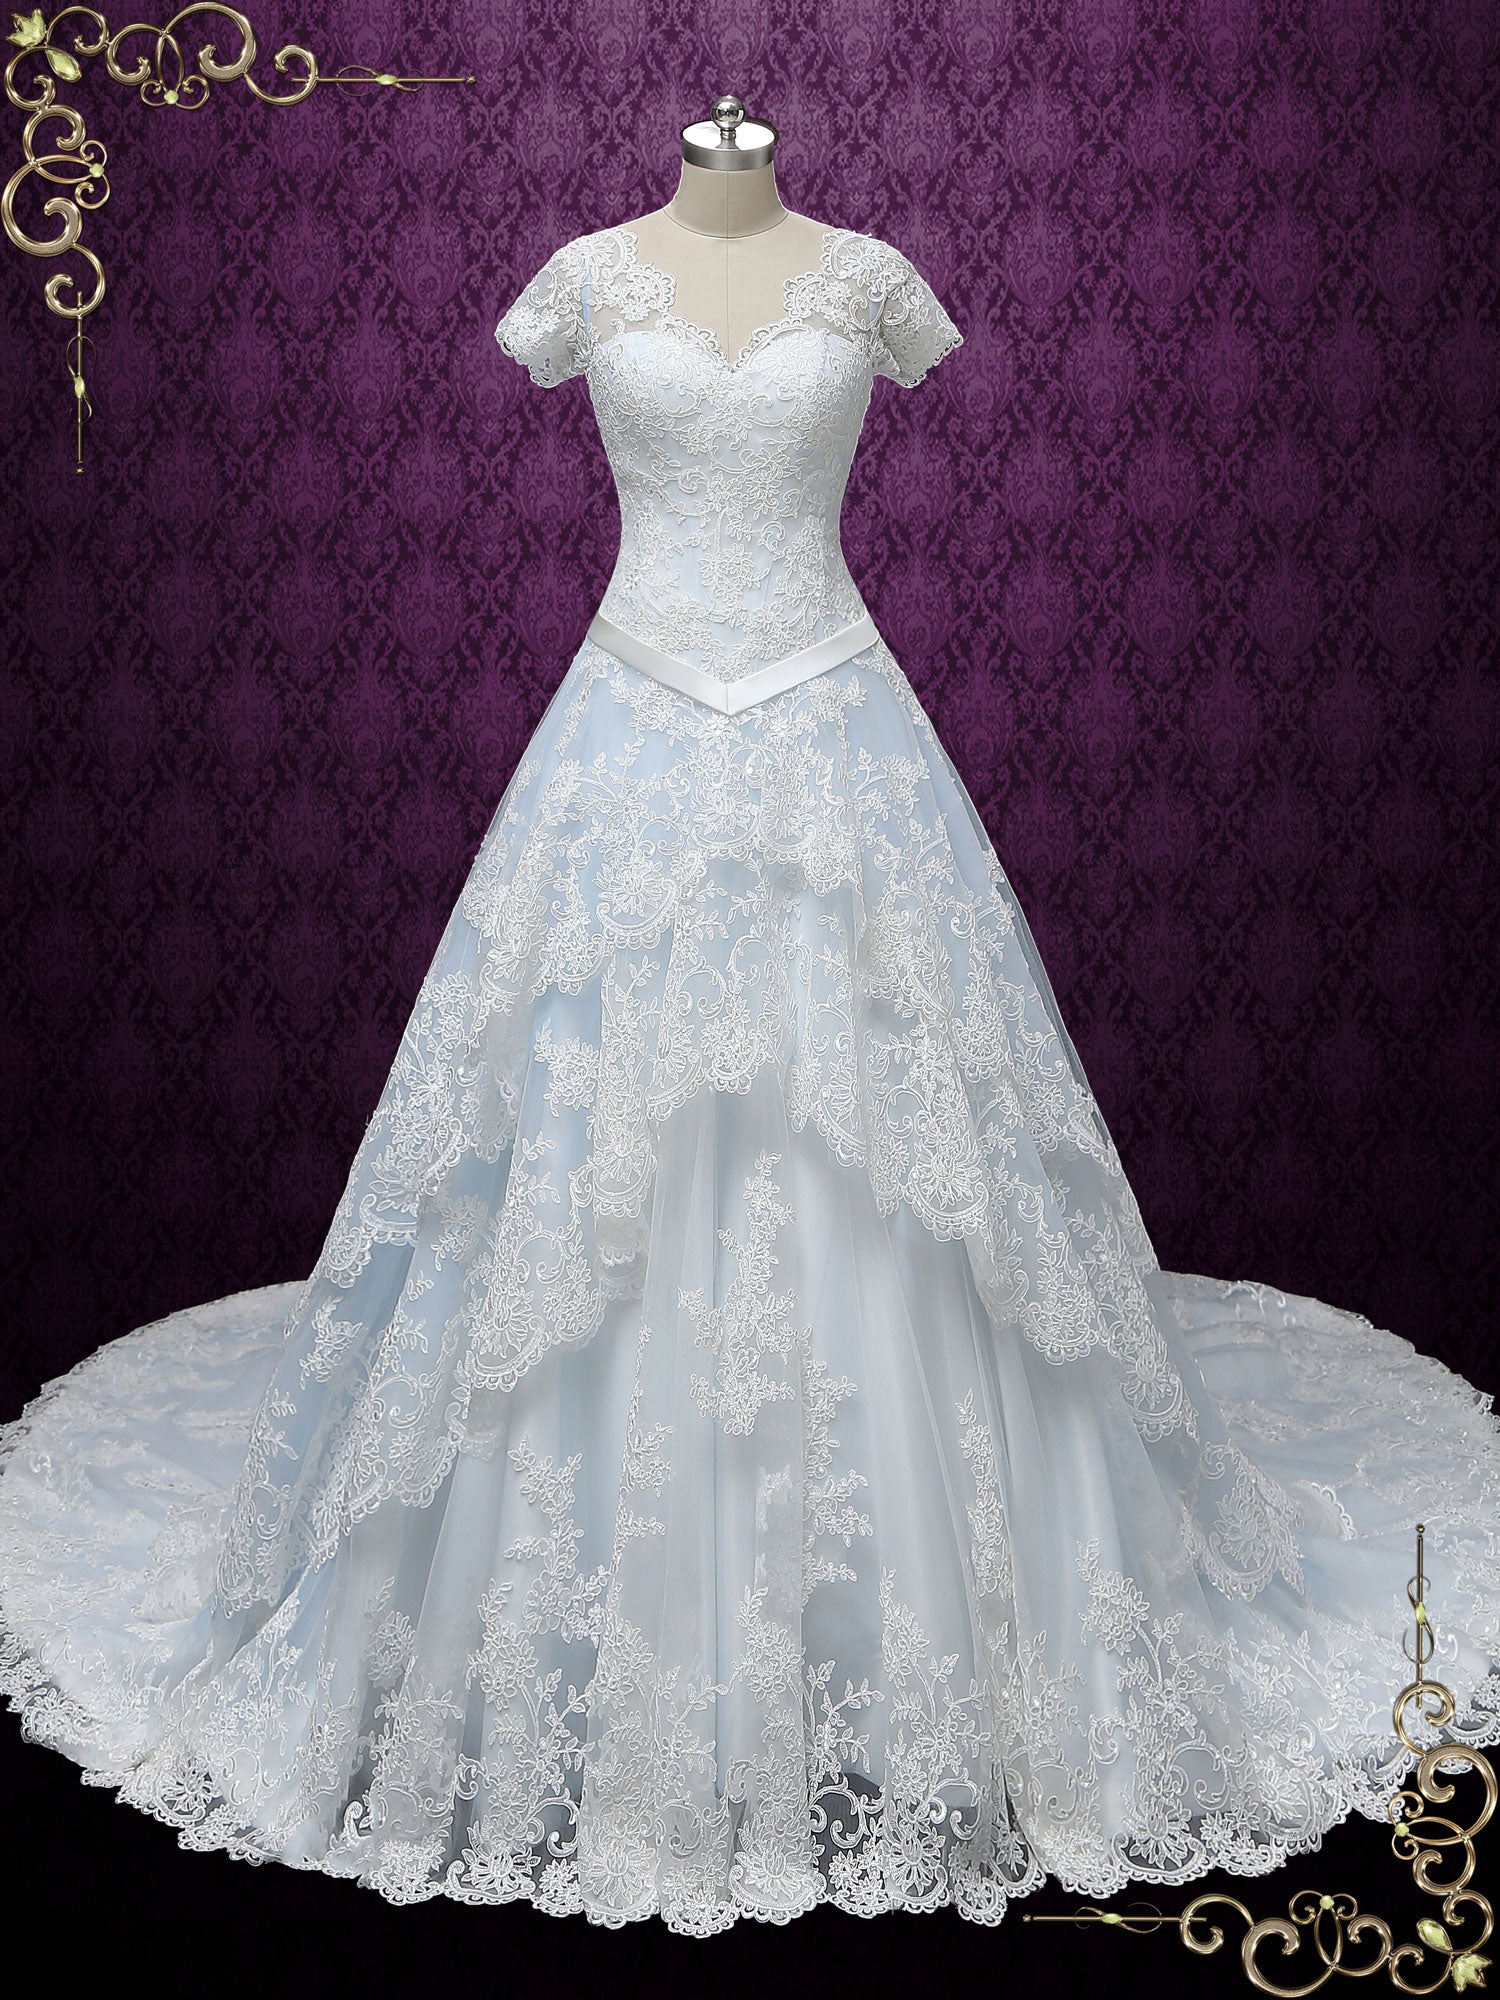 cinderella mermaid wedding dress